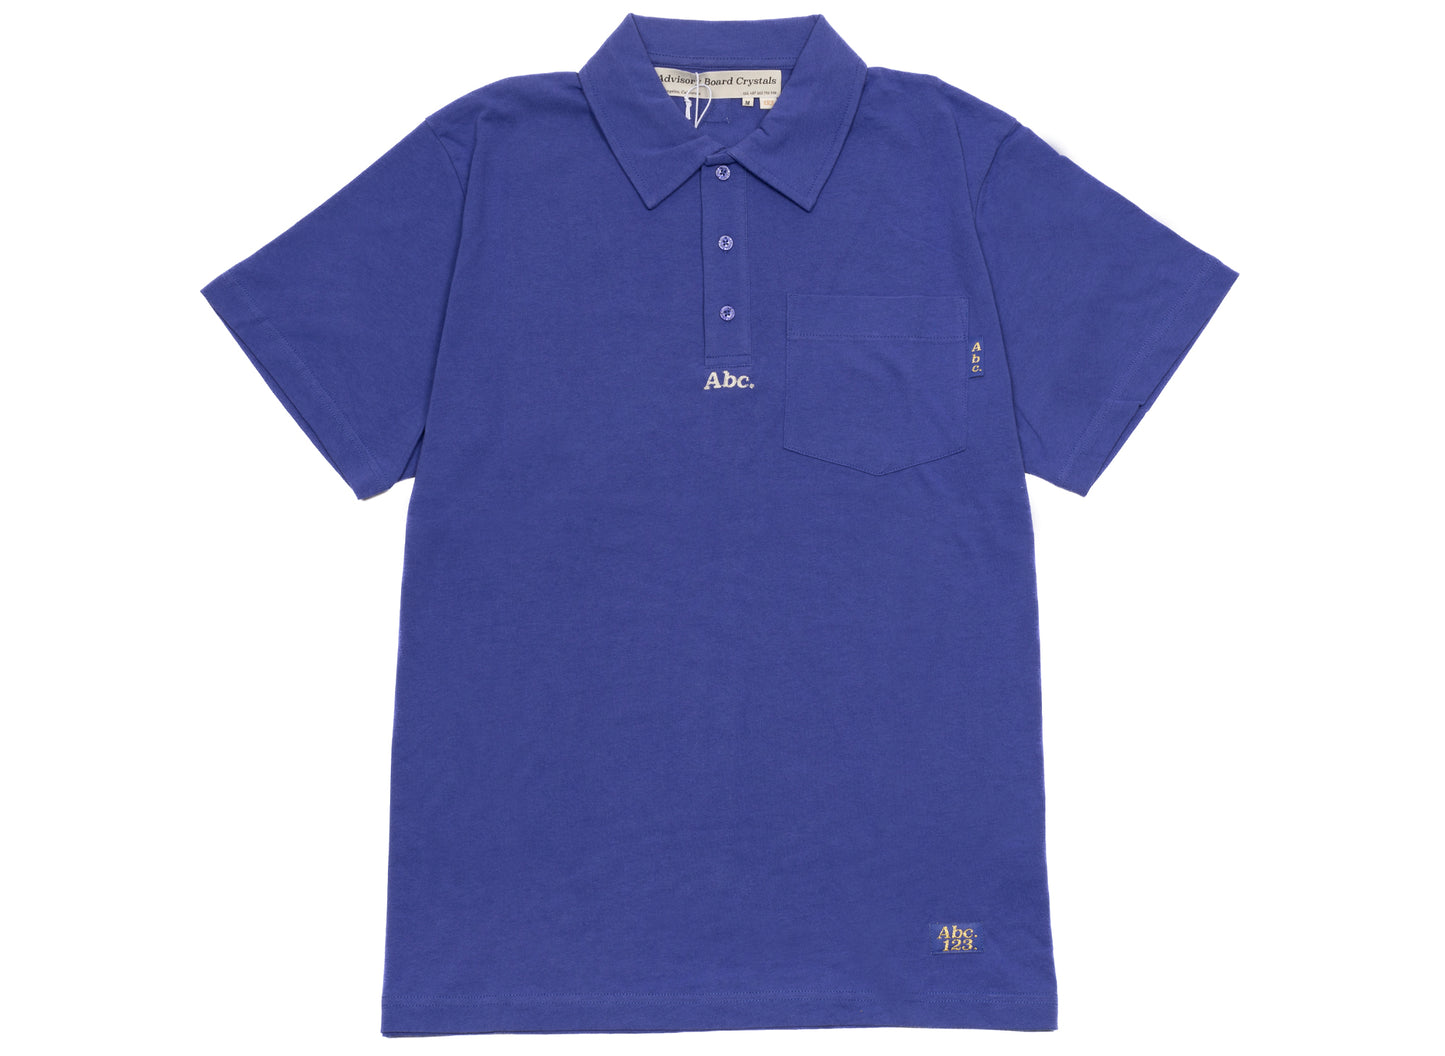 Advisory Board Crystals Abc. 123 Short Sleeve Polo Shirt in Sapphire